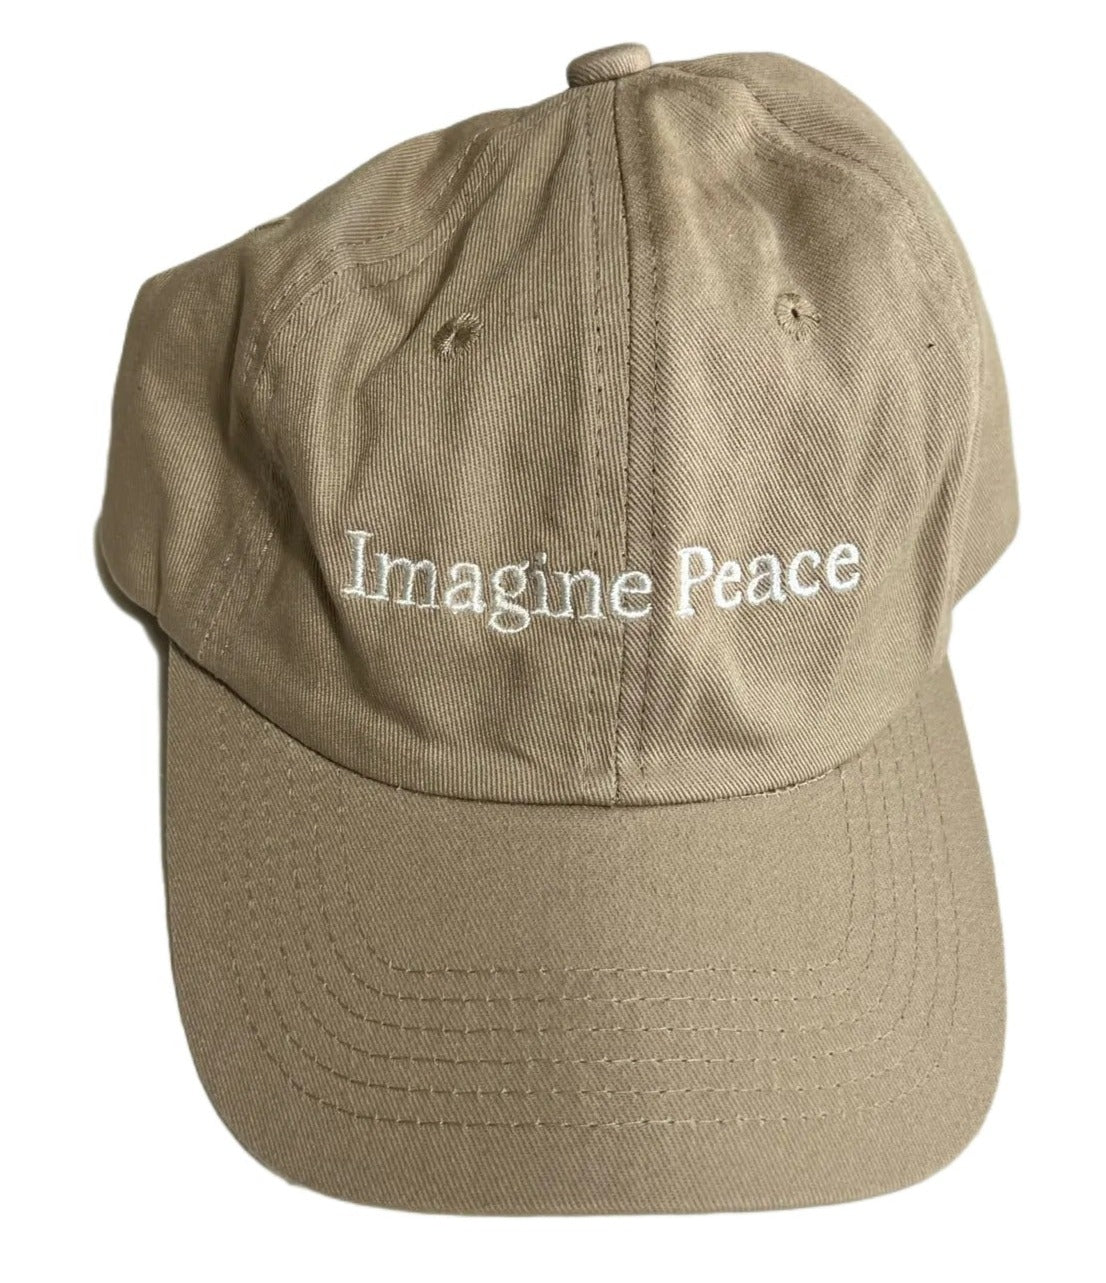 Ezili- Tan "Imagine Peace" Baseball Hat